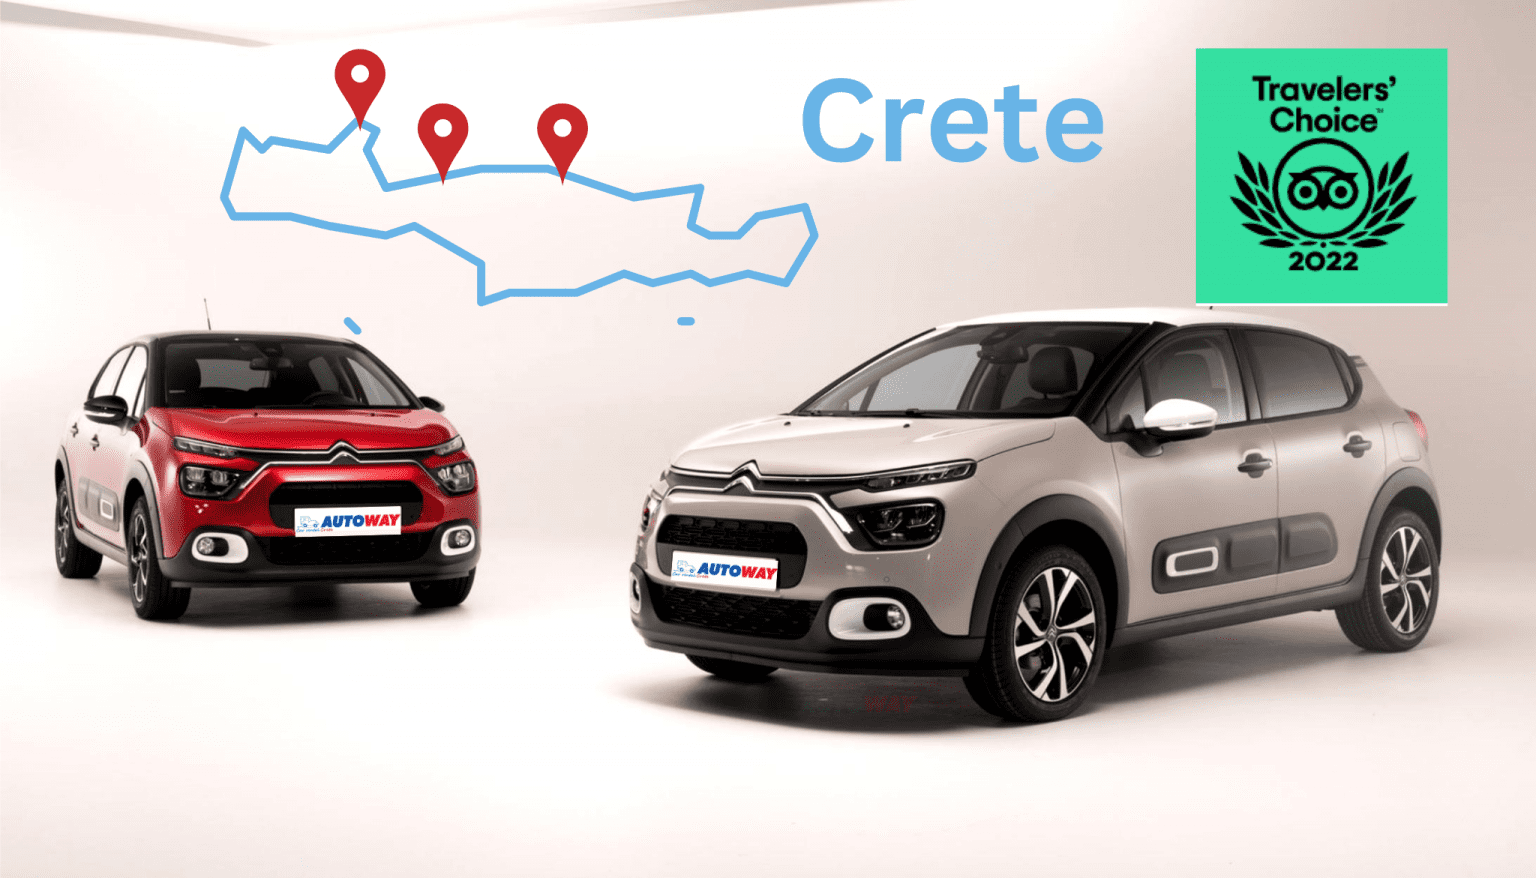 Crete Front Car Rental, trip advisor